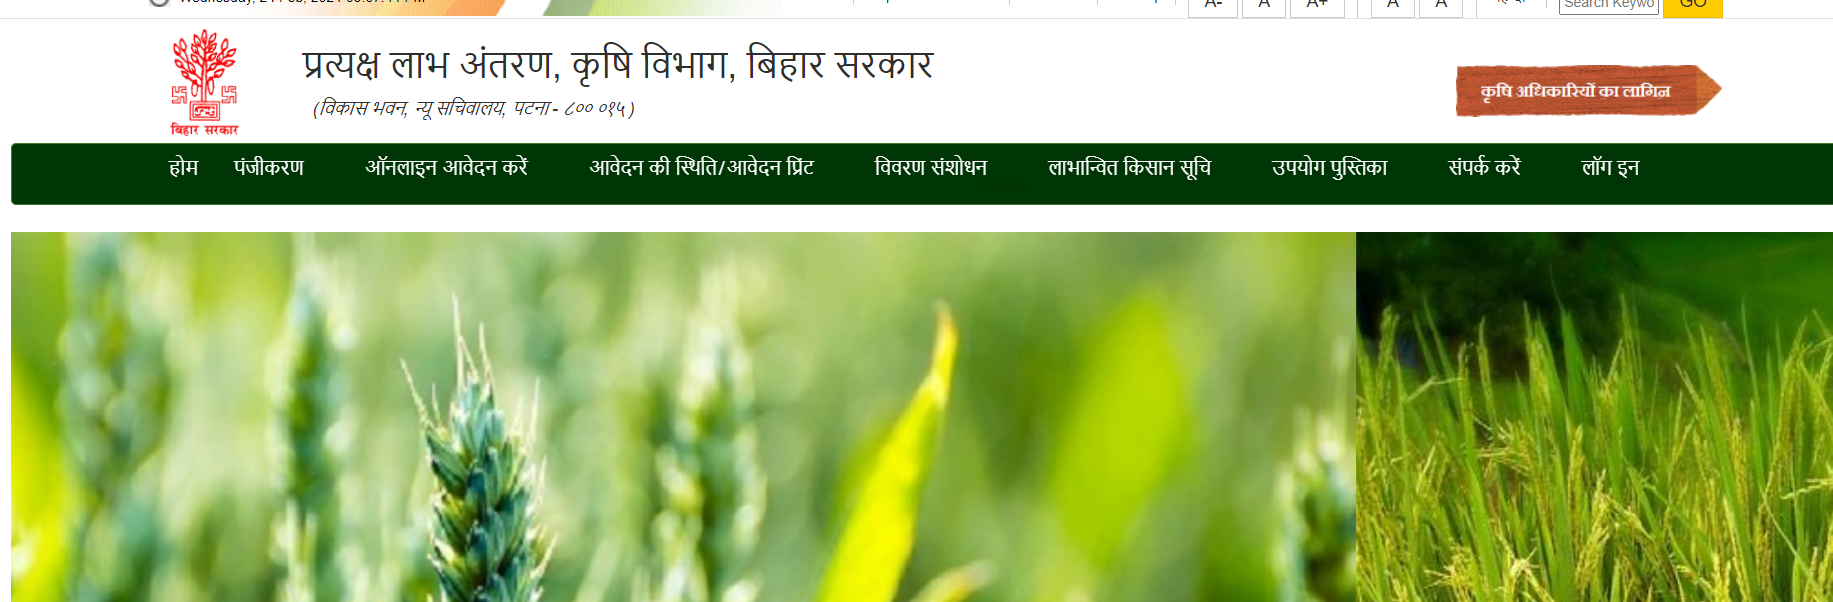 कृषि-इनपुट-अनुदान-योजना-Online-awedan-prkriya 